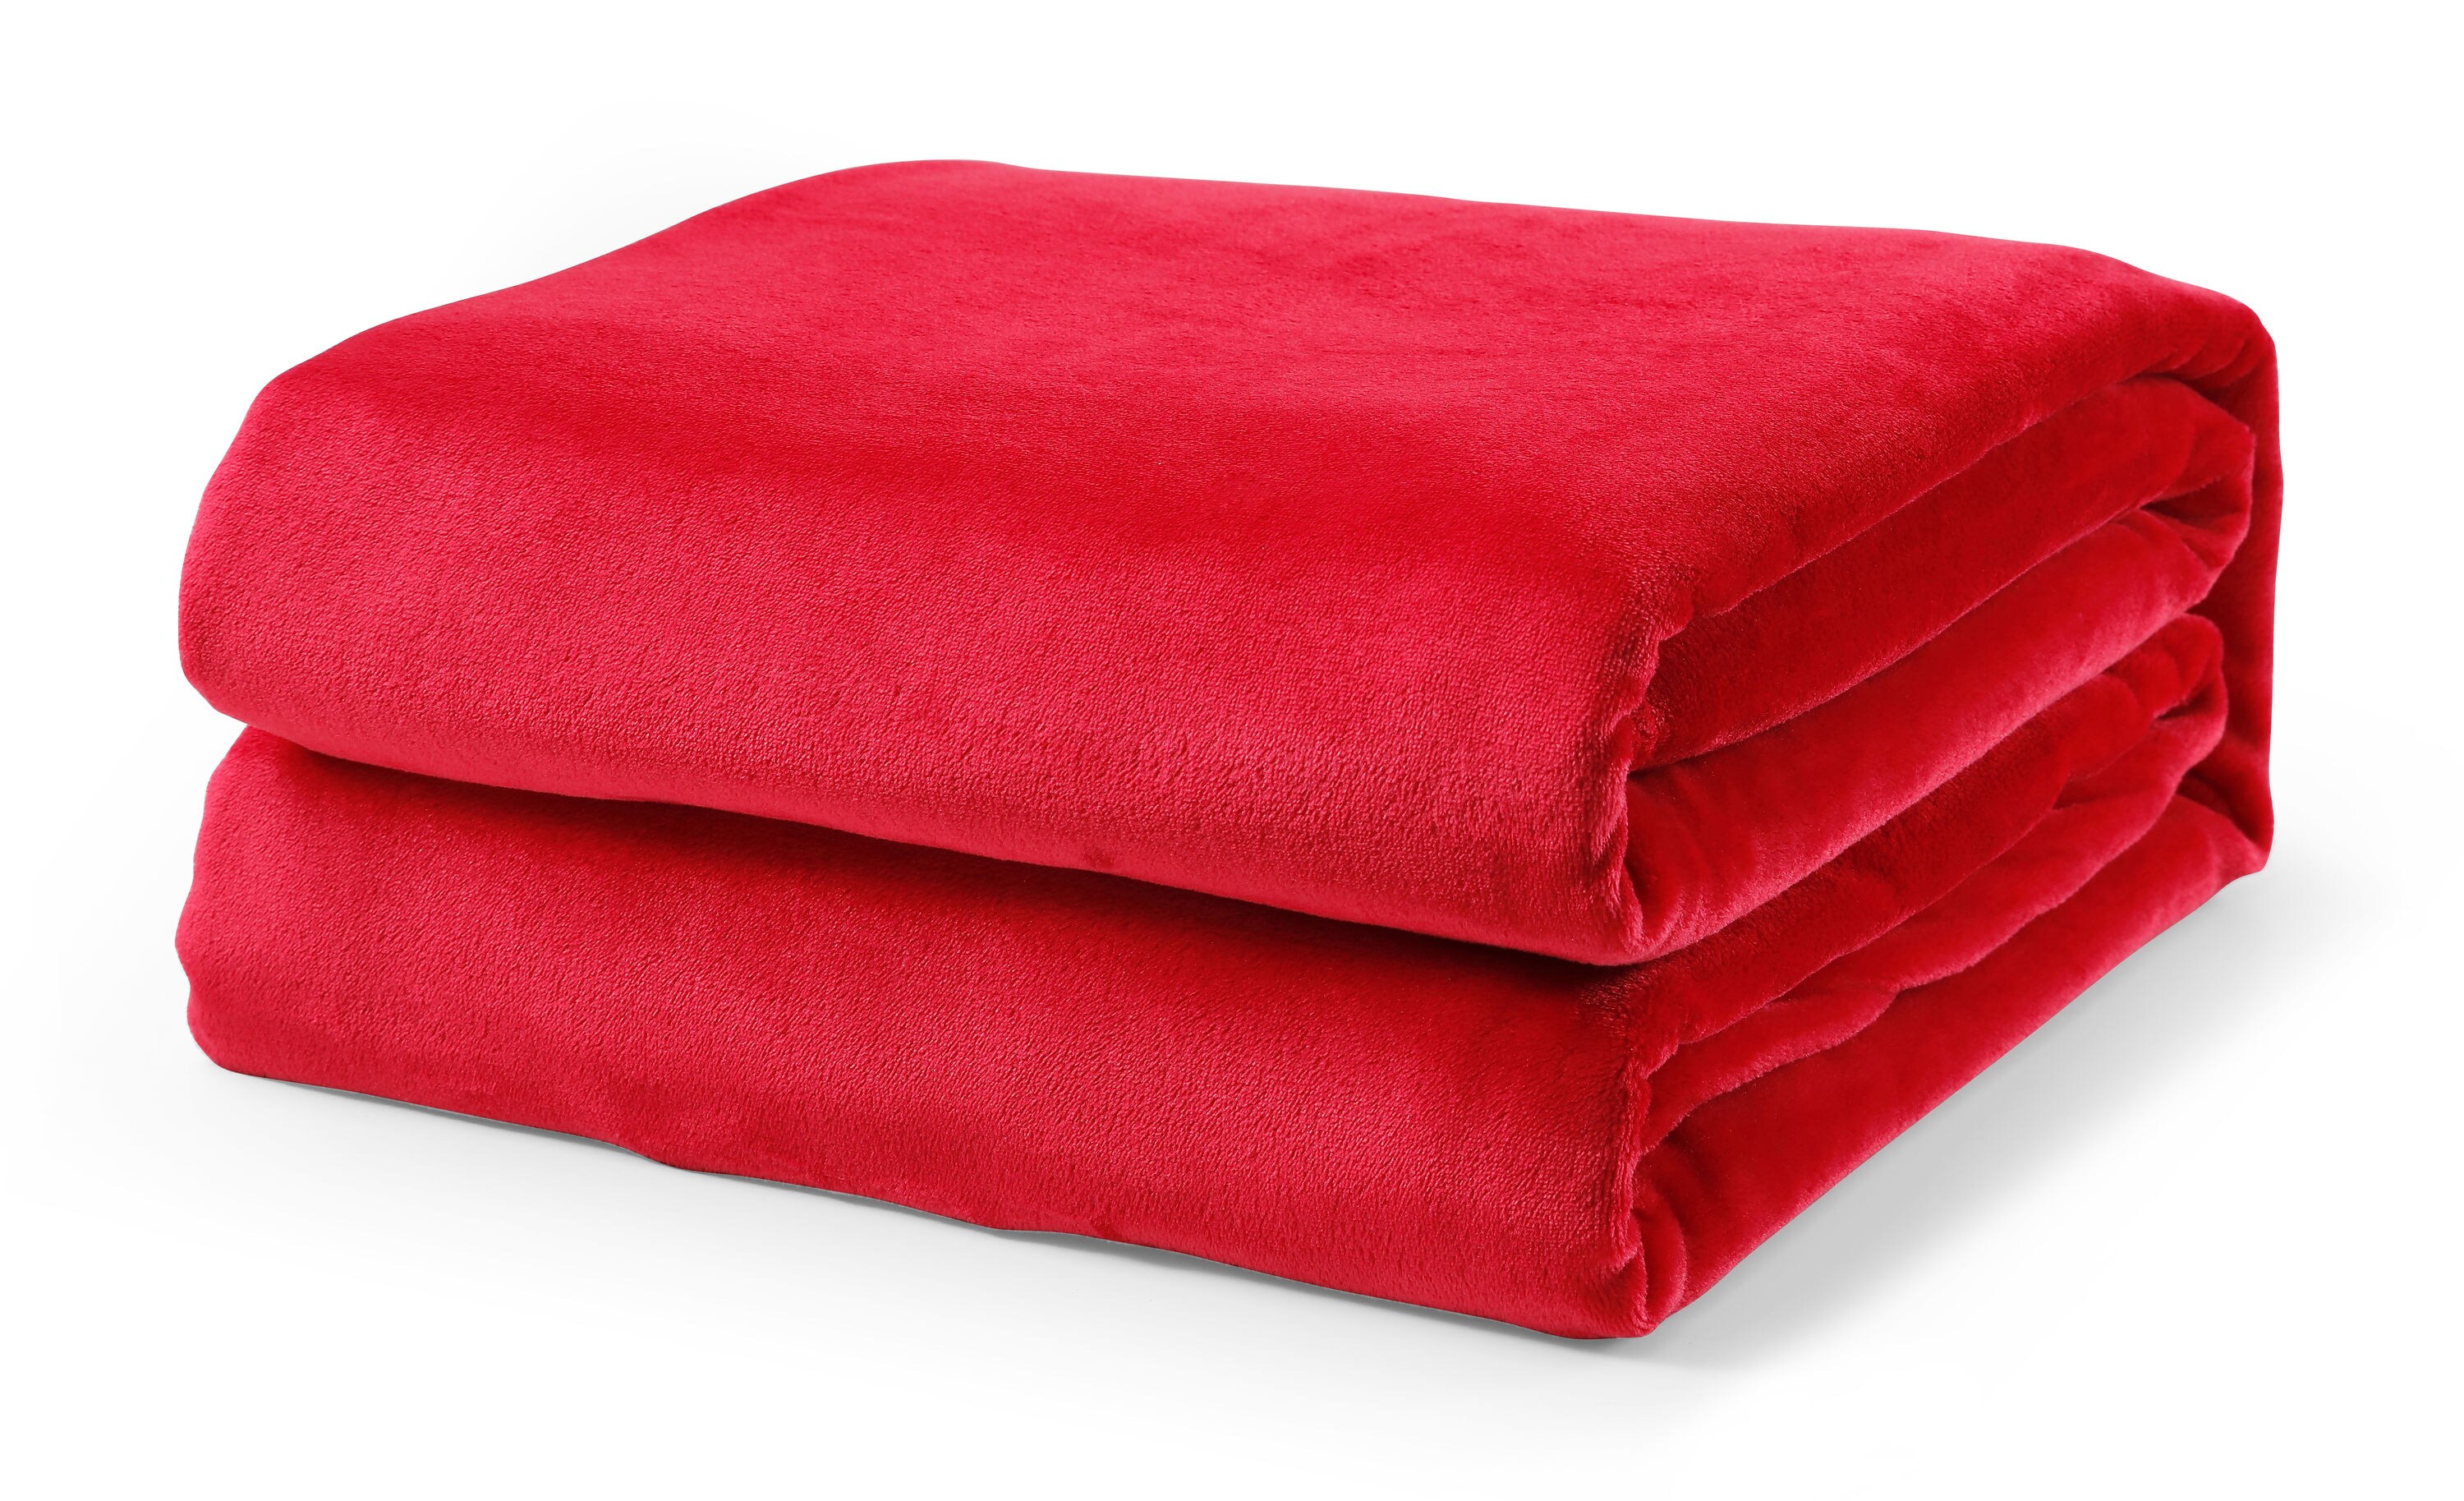 LBaiet Red Fleece Twin Blanket 60-inx80-in 100% Polyester - Soft